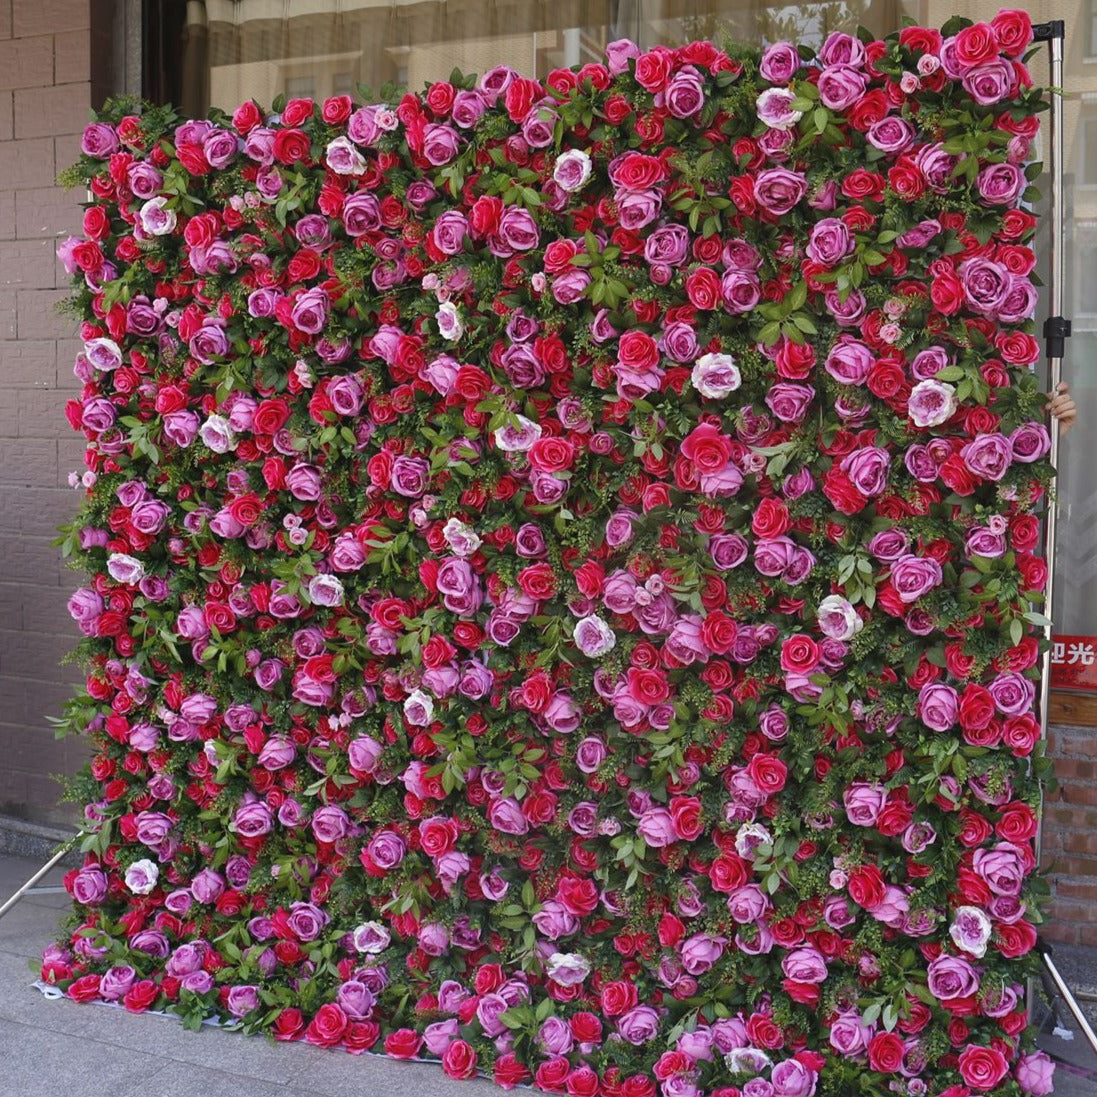 3D Artificial Flower Wall Arrangement Wedding Party Birthday Backdrop Decor HQ3509